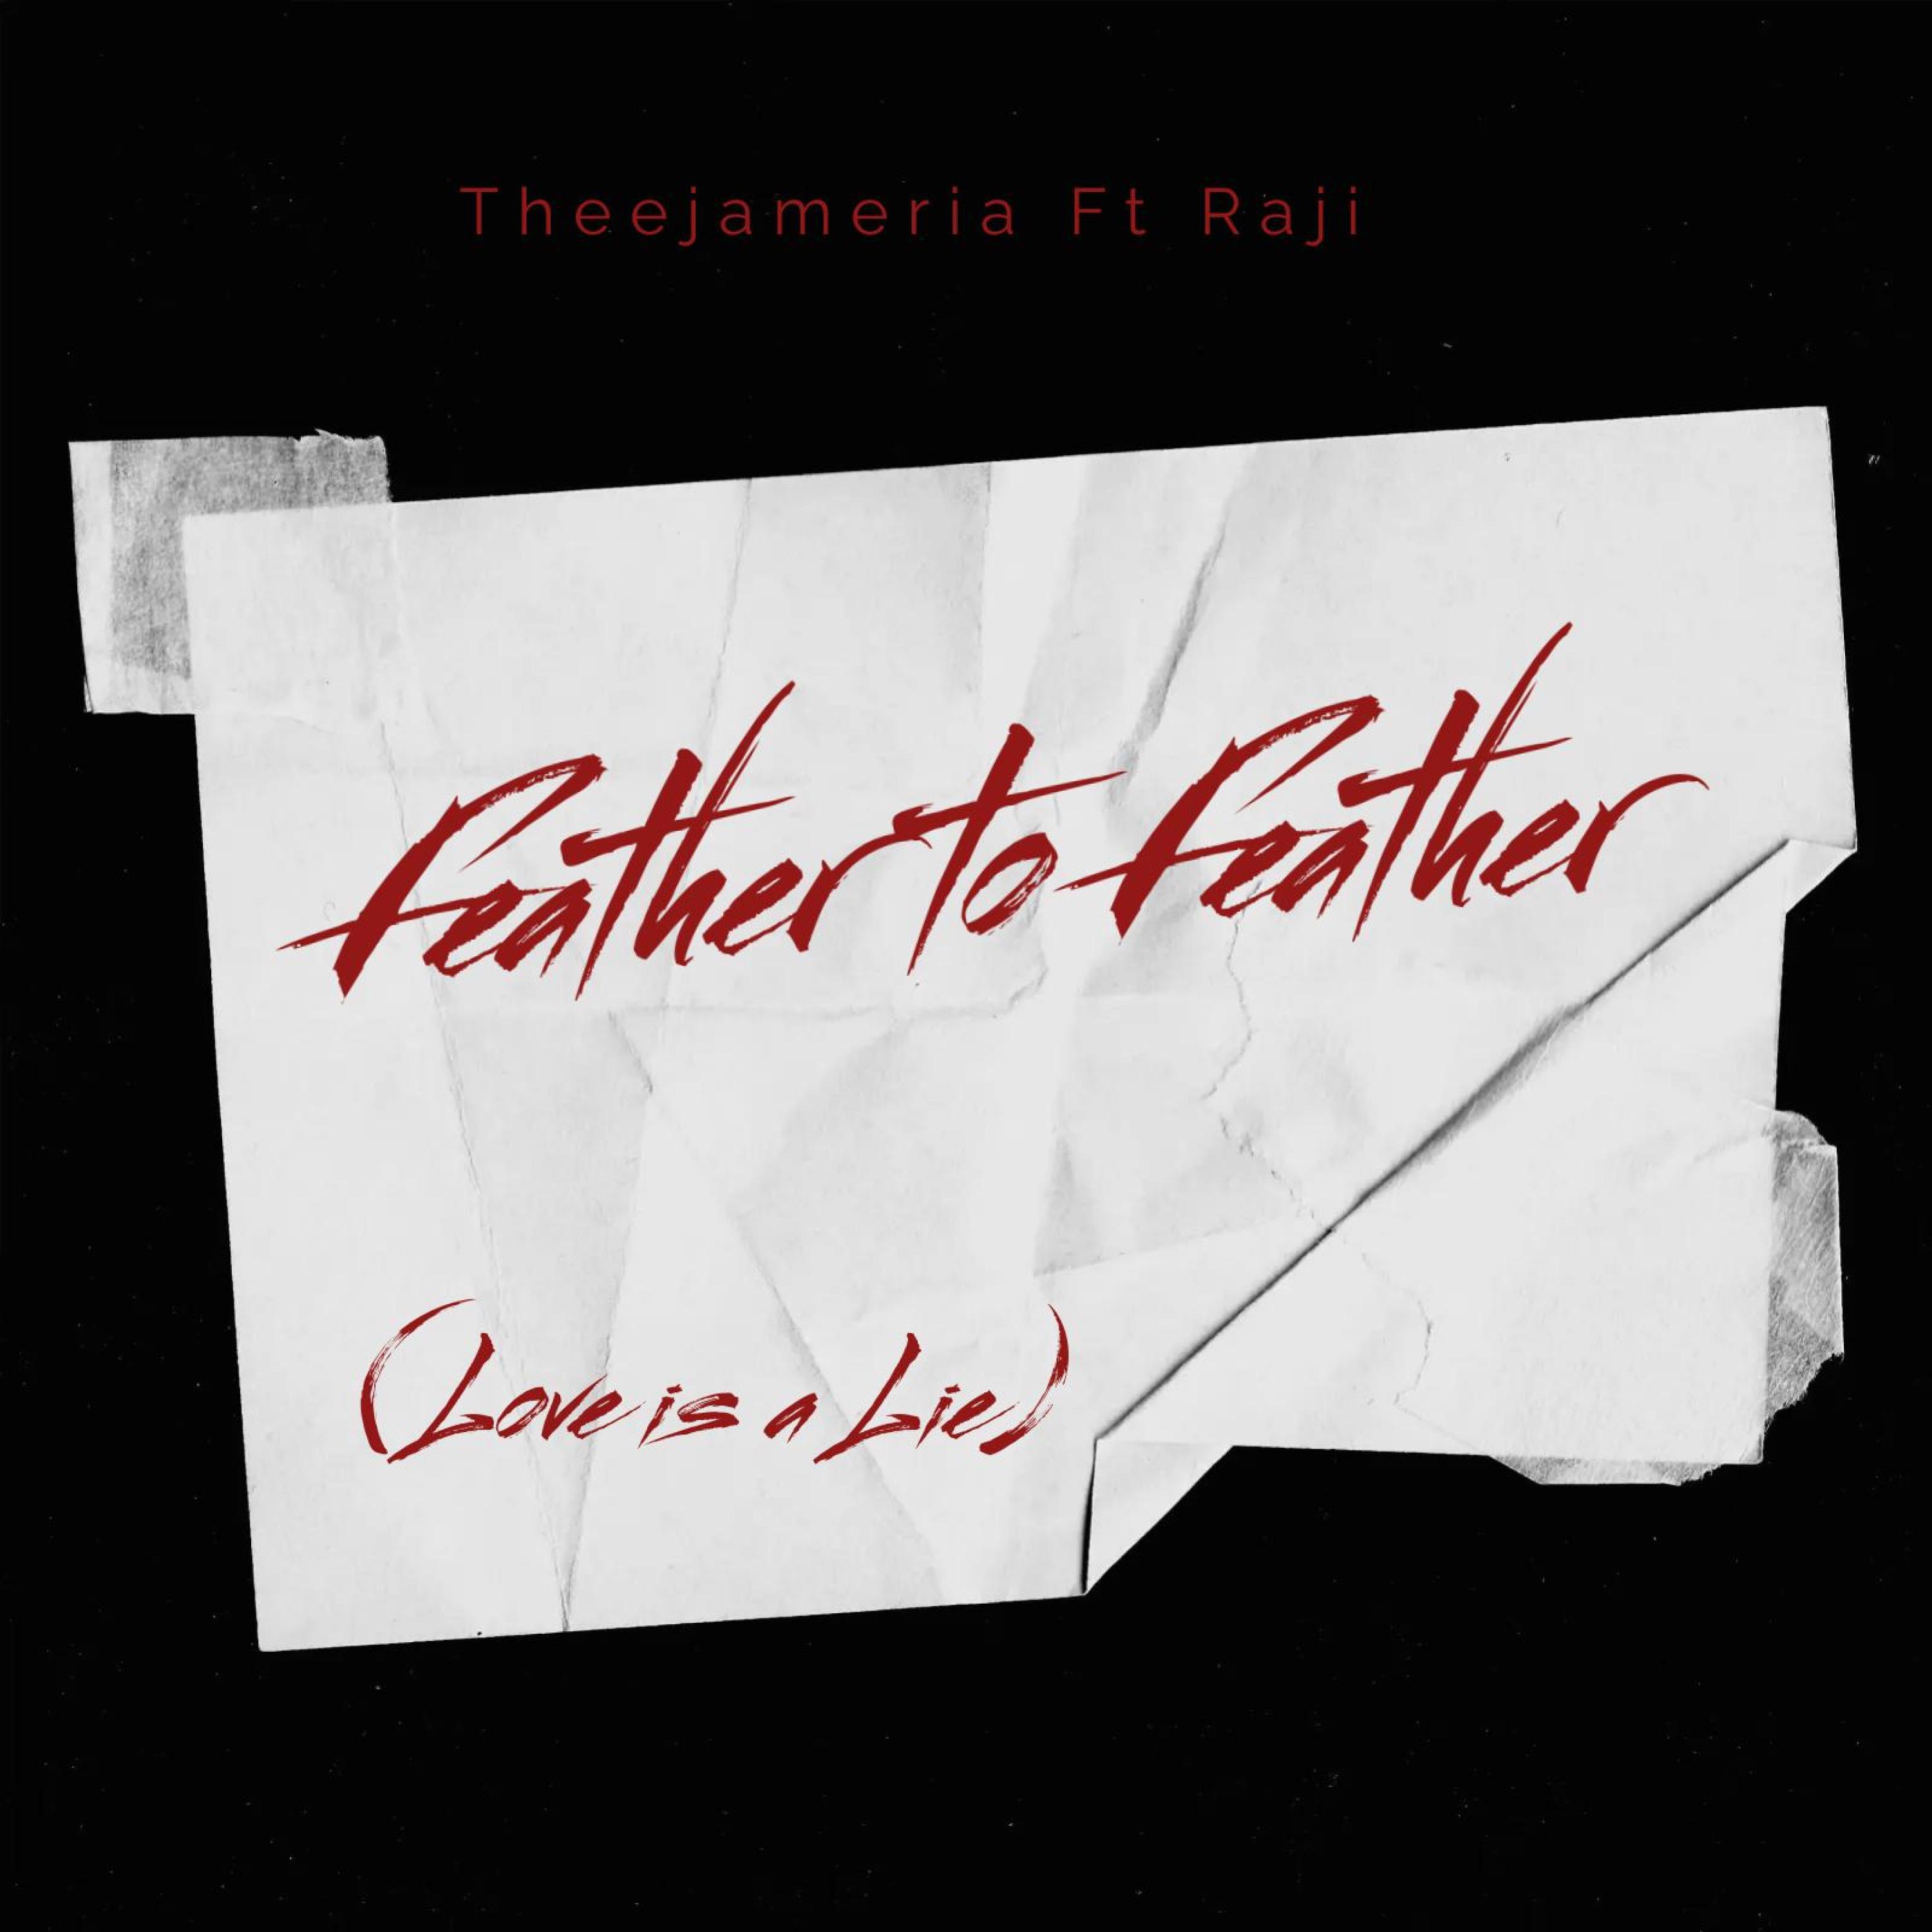 Theejameria - Feather to Feather (feat. Raji)